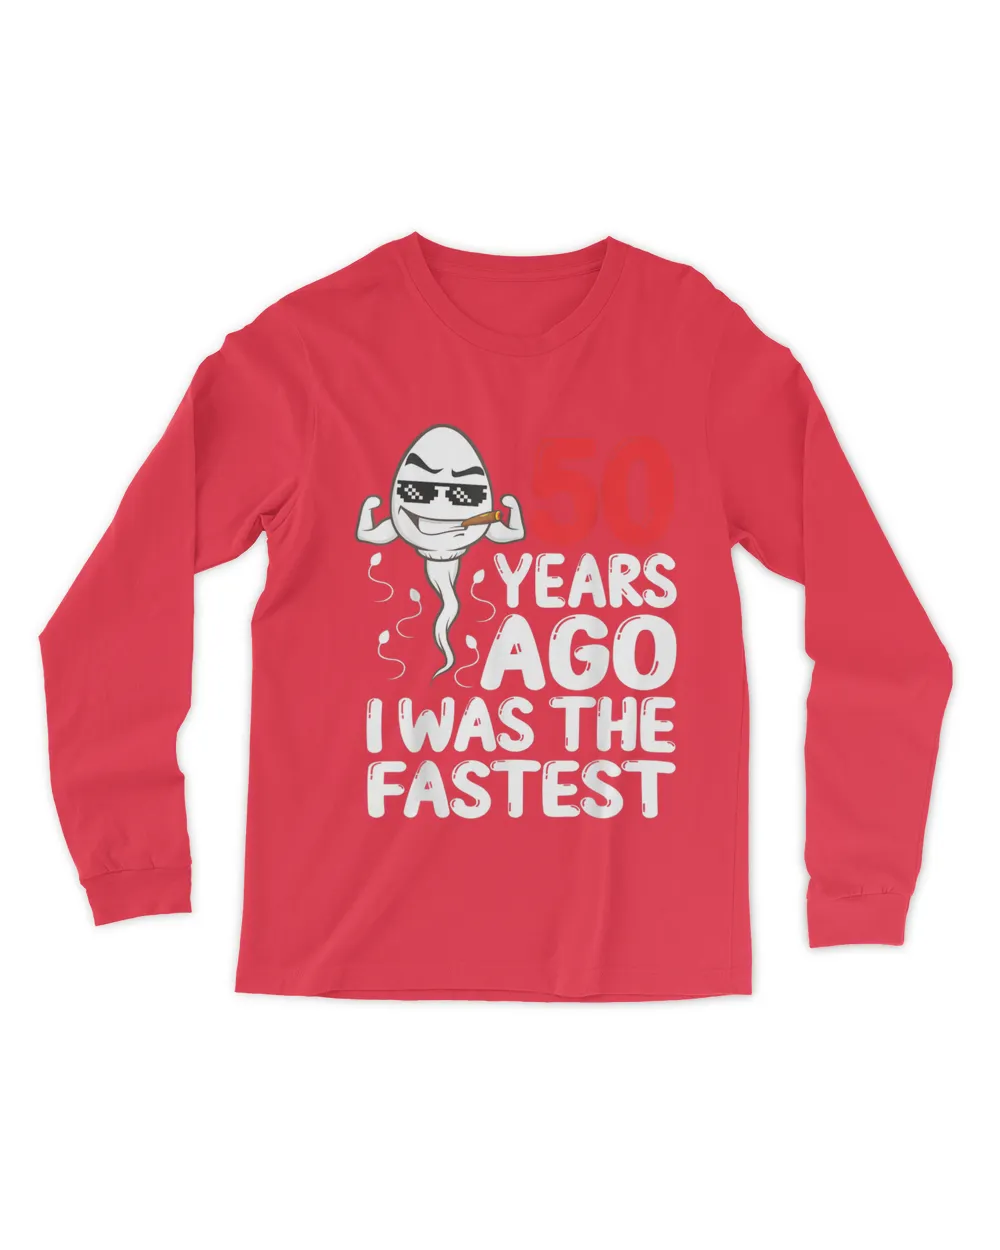 Mens 50th Birthday Gag dress 50 Years Ago I Was The Fastest Funny T-Shirt